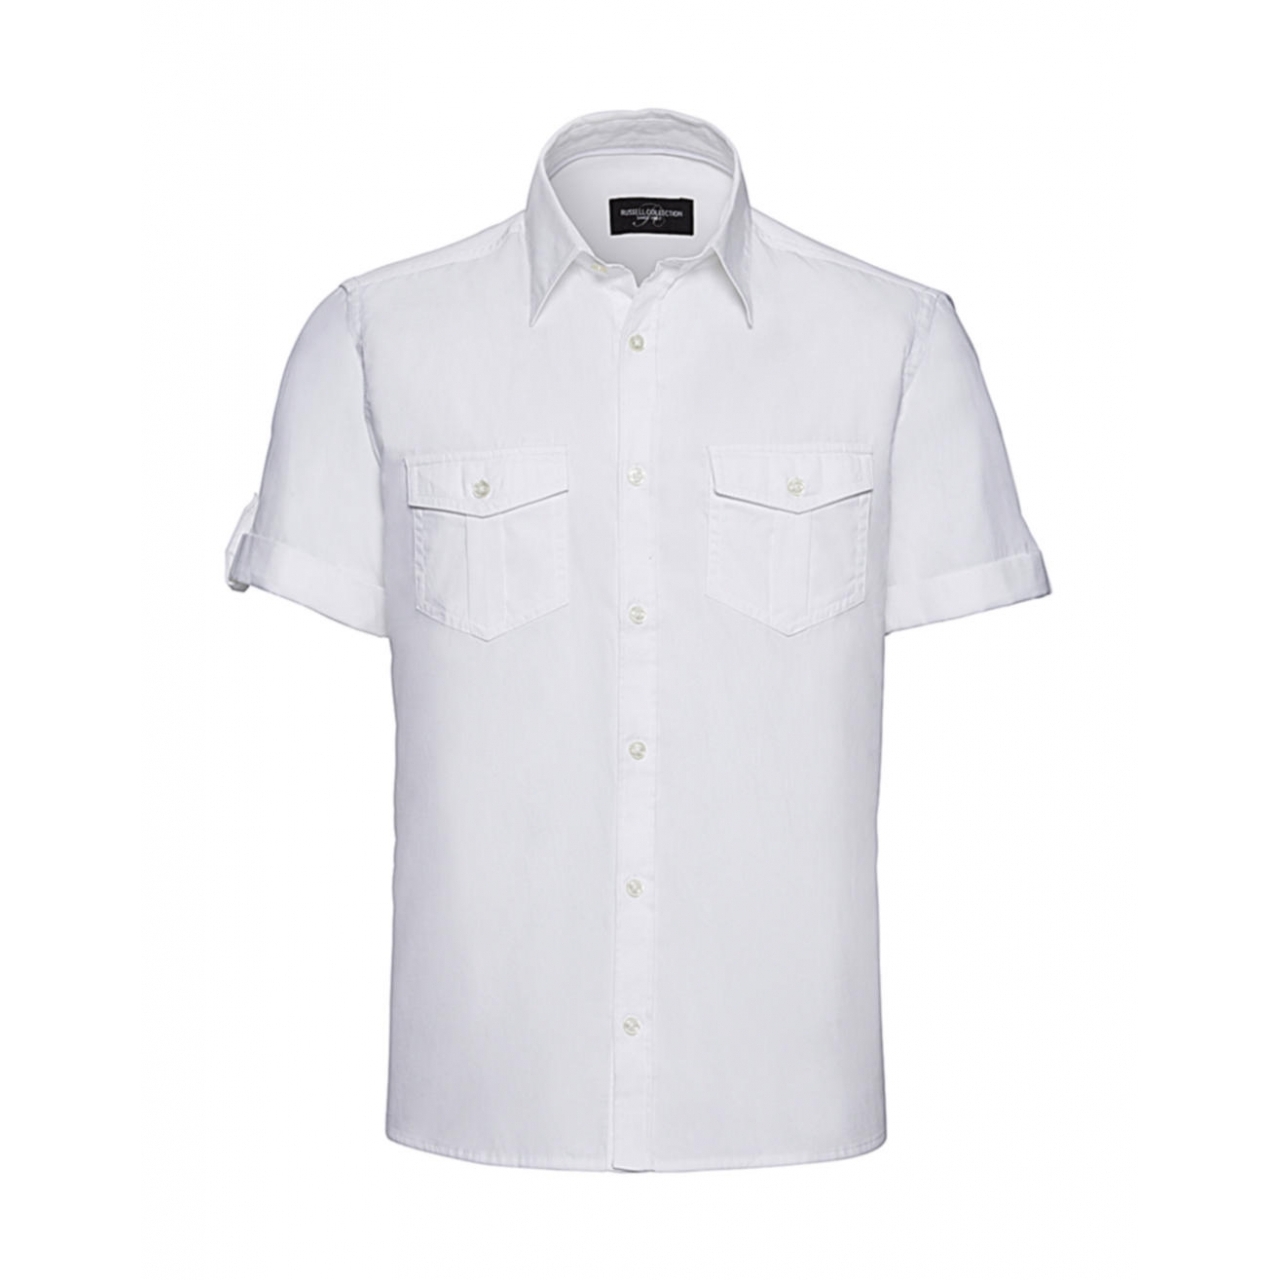 Košile pánská krátký rukáv Rusell Roll Sleeve - bílá, L